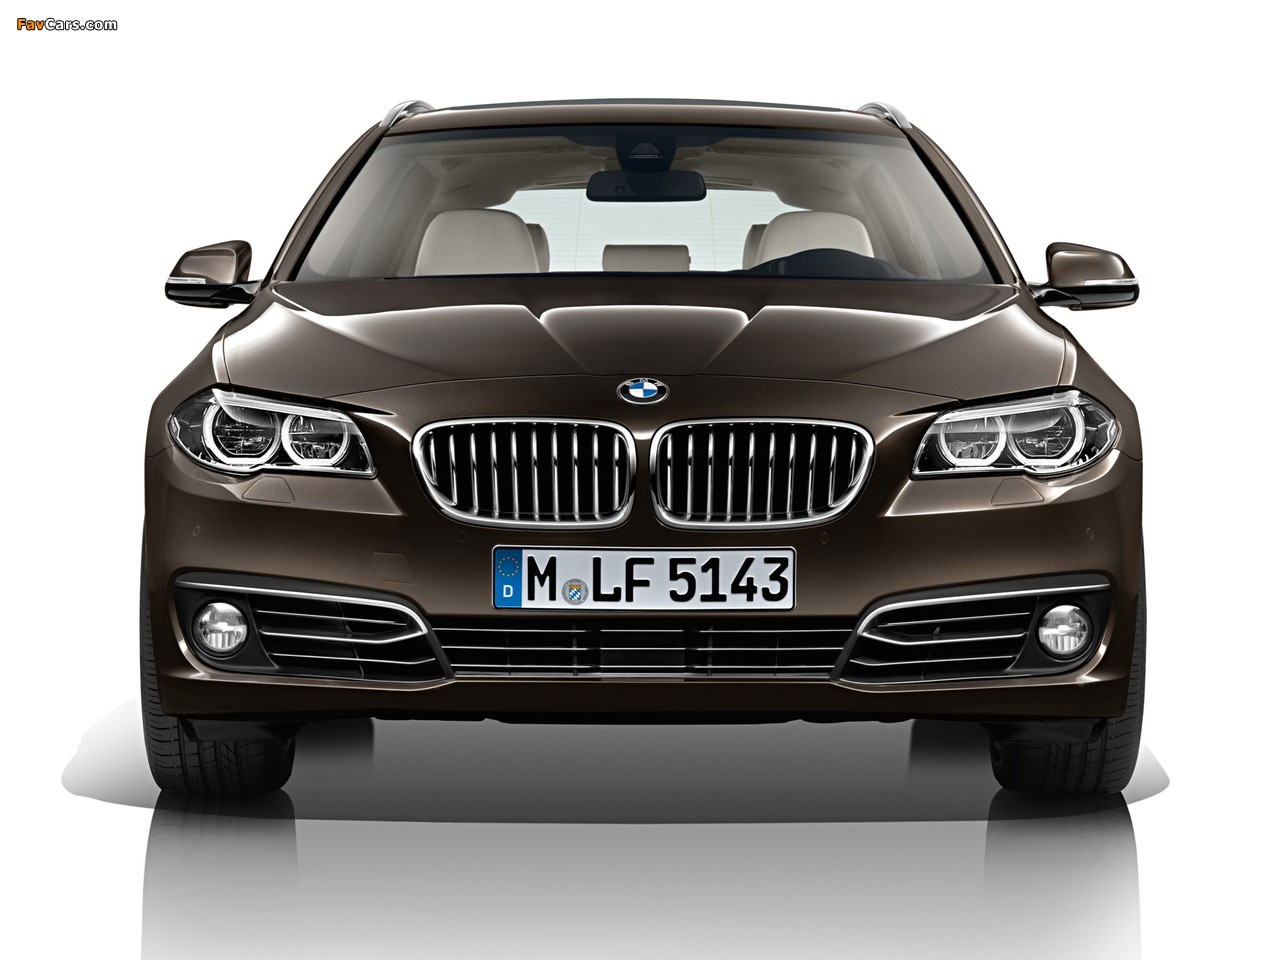 BMW 530d xDrive Touring Modern Line (F11) 2013 photos (1280 x 960)